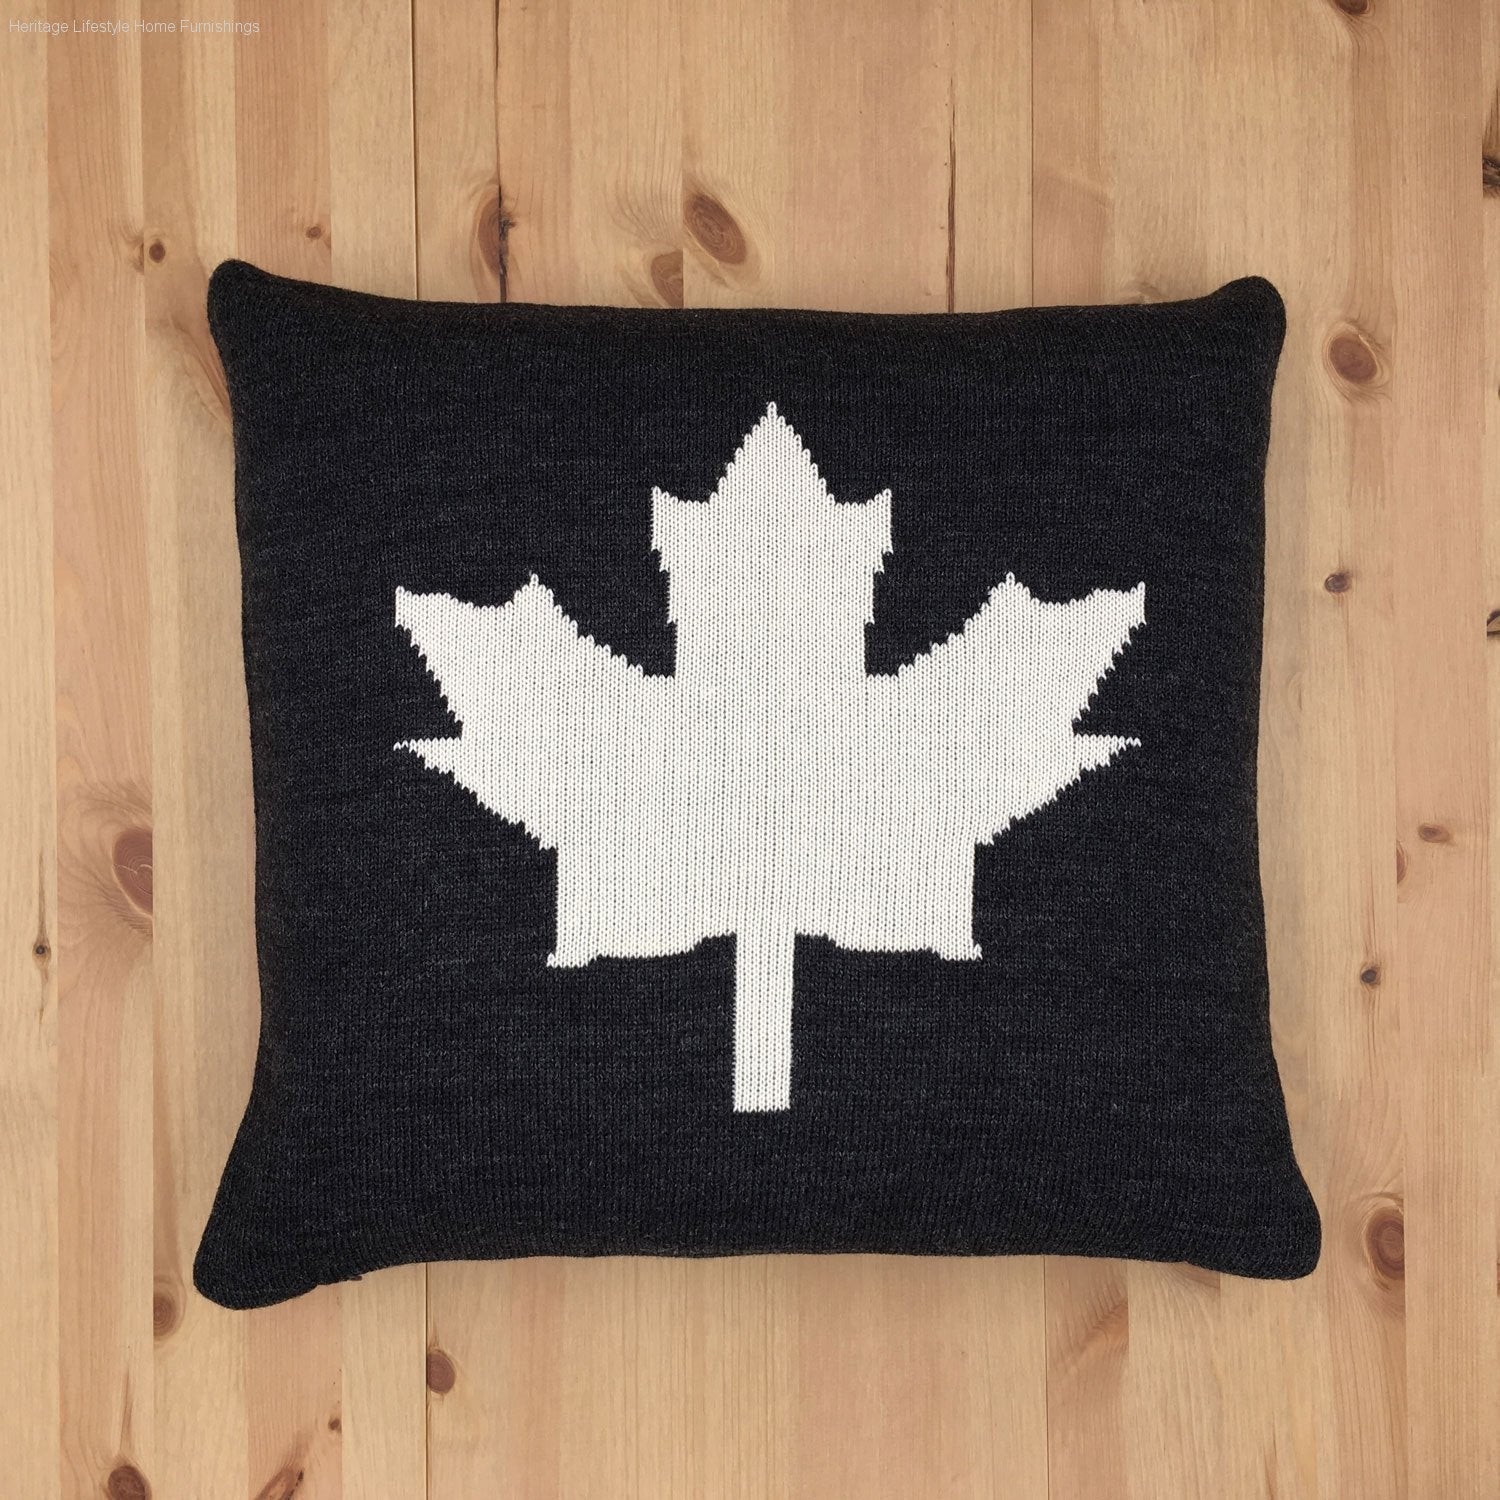 Pillow - O Canada Knit Pillow